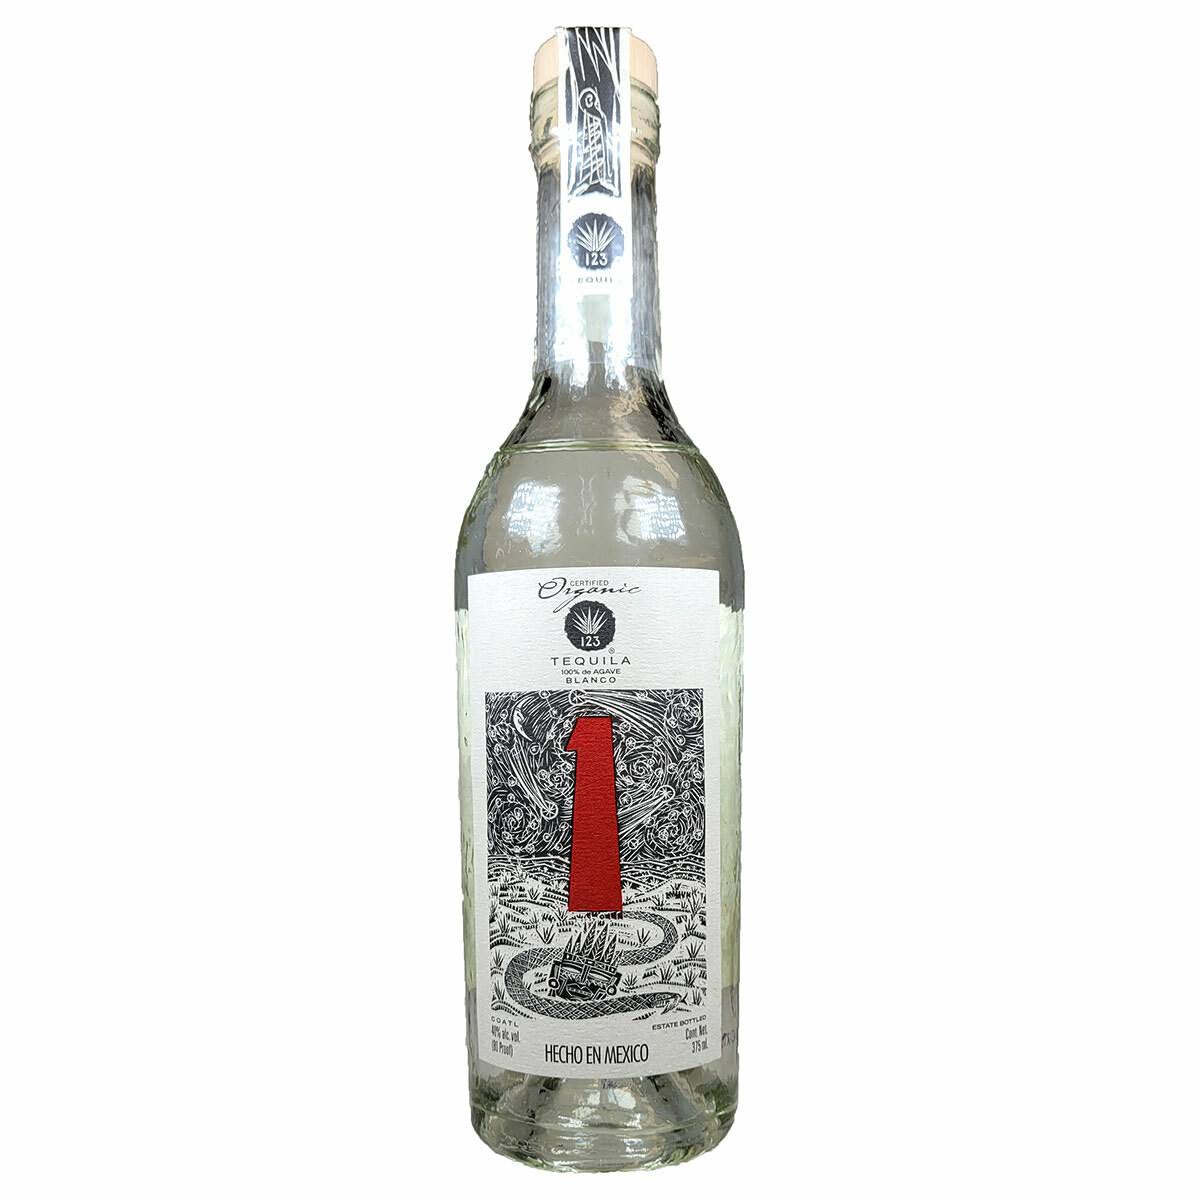 123 Organic Tequila Blanco (1) 375ml